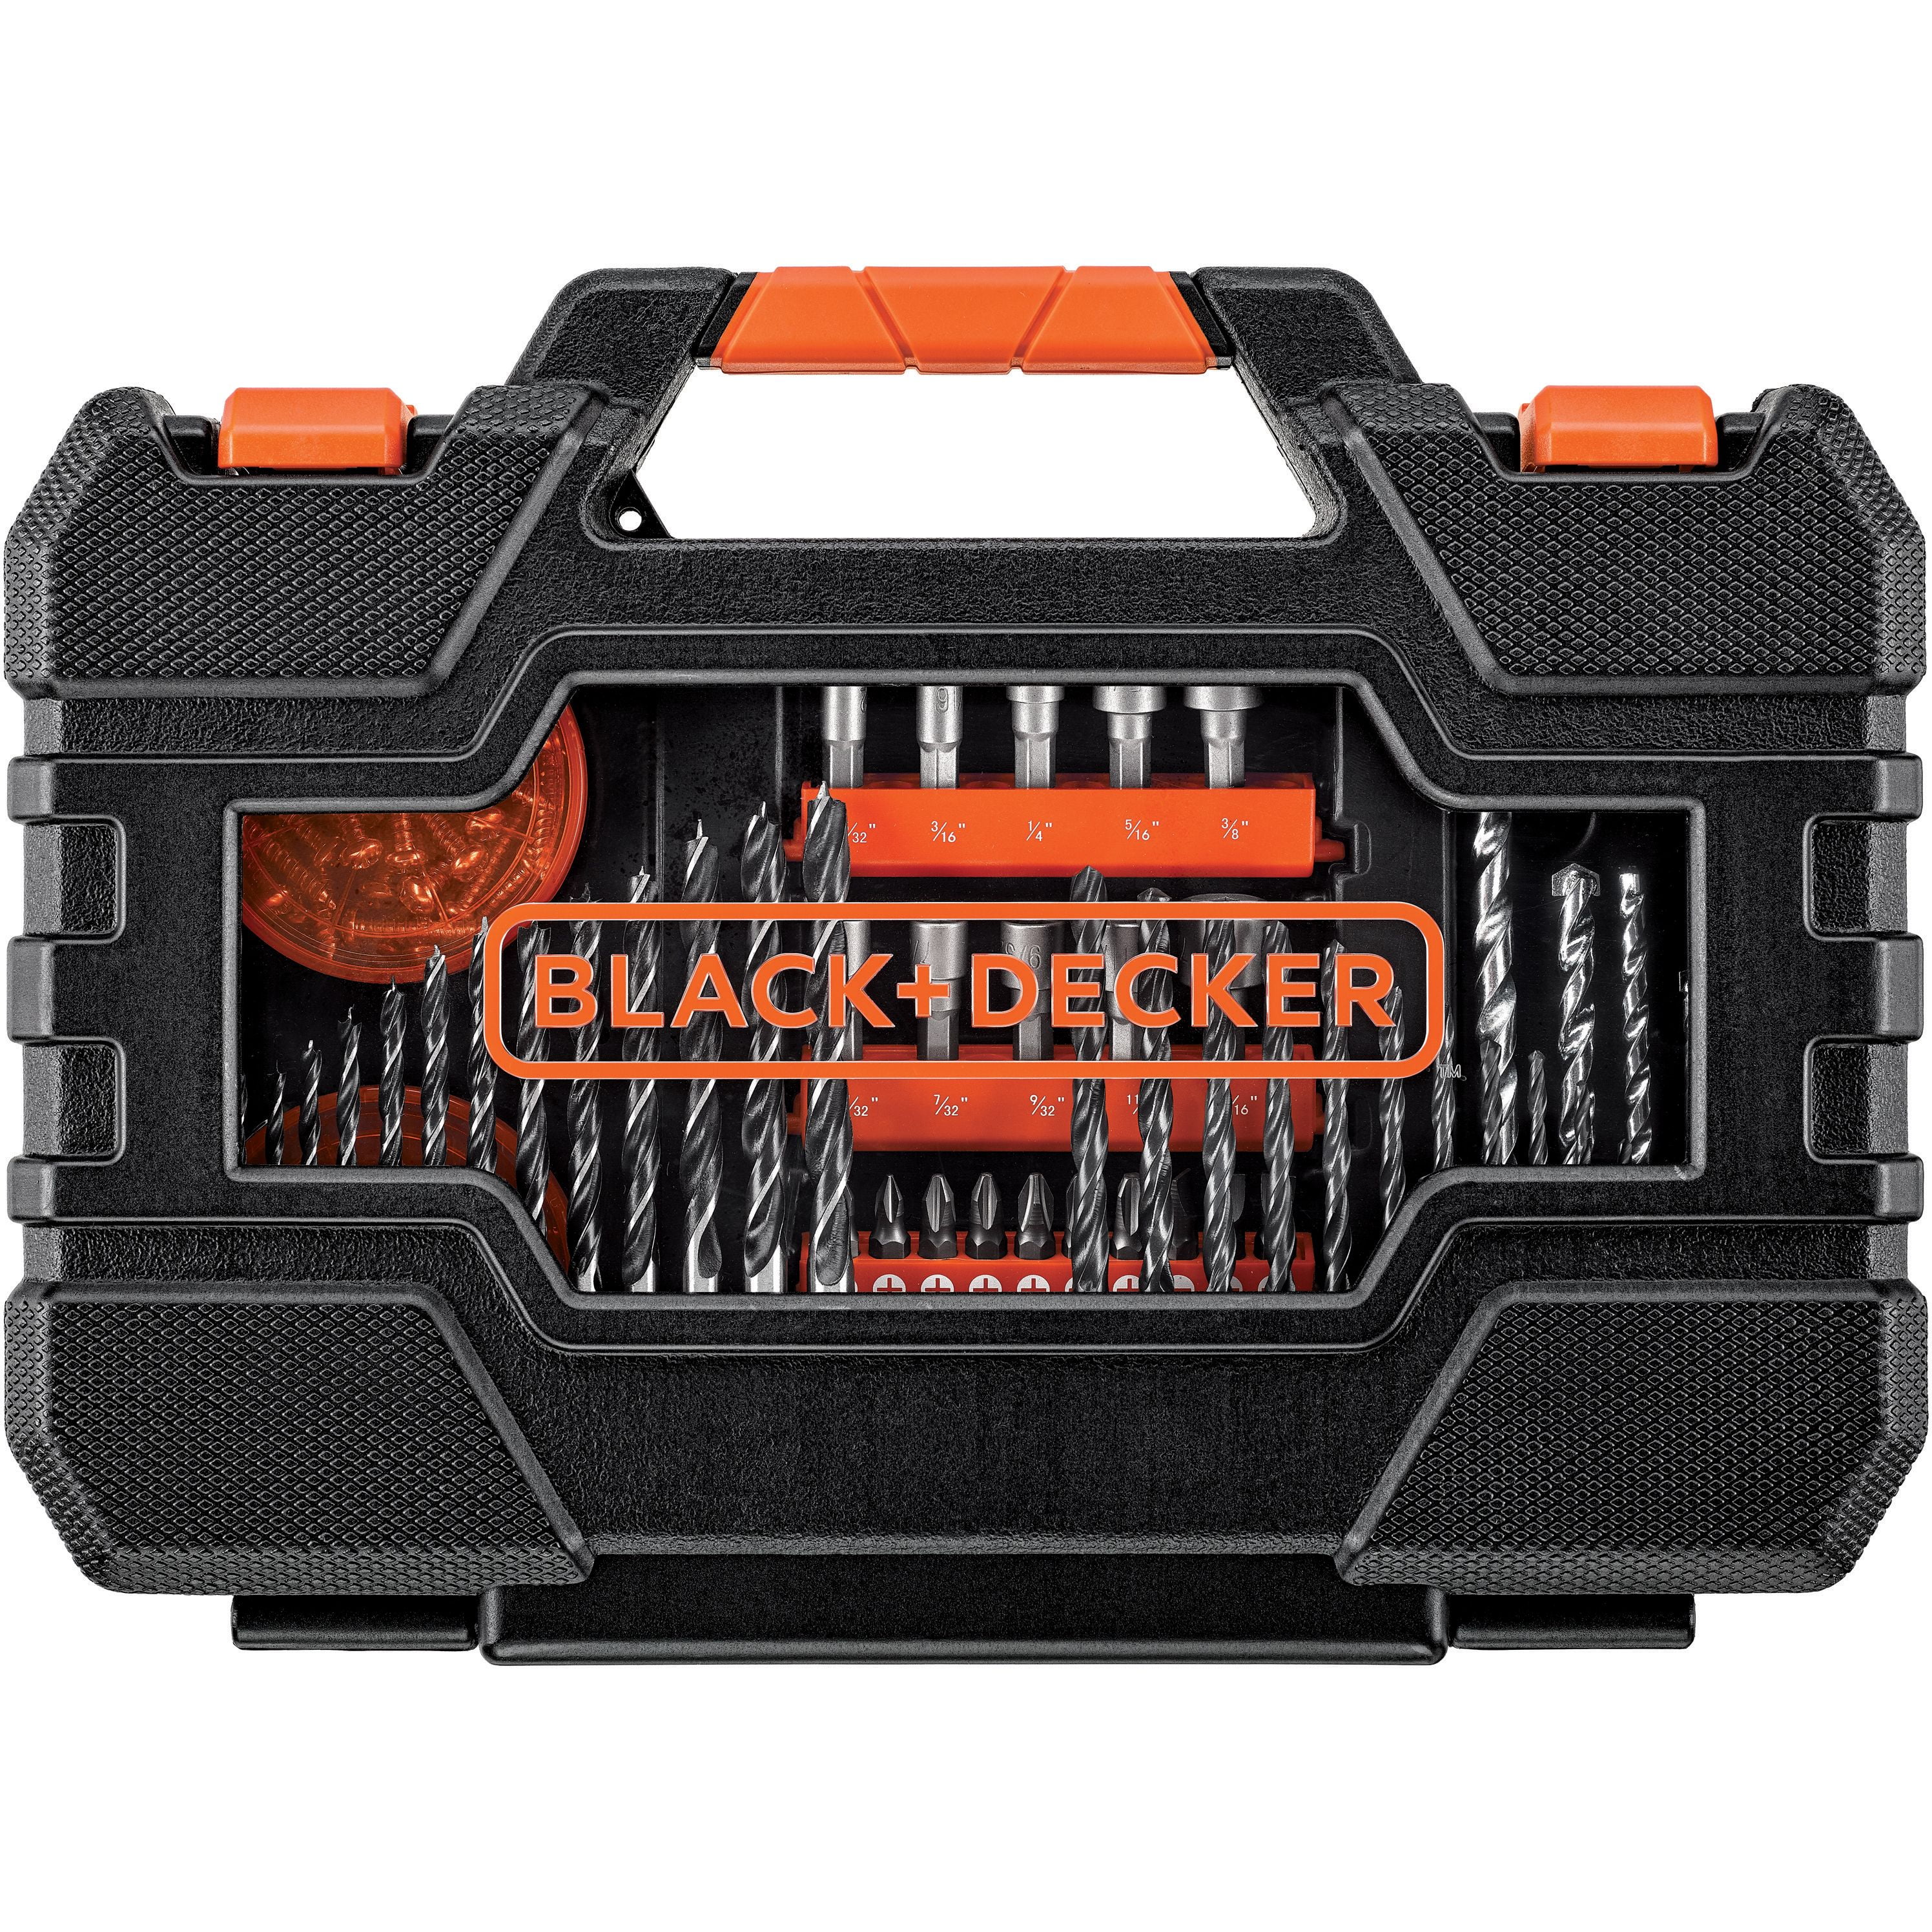 Drill Accessory 201-Piece Set - BLACK+DECKER - Bitplaza Inc